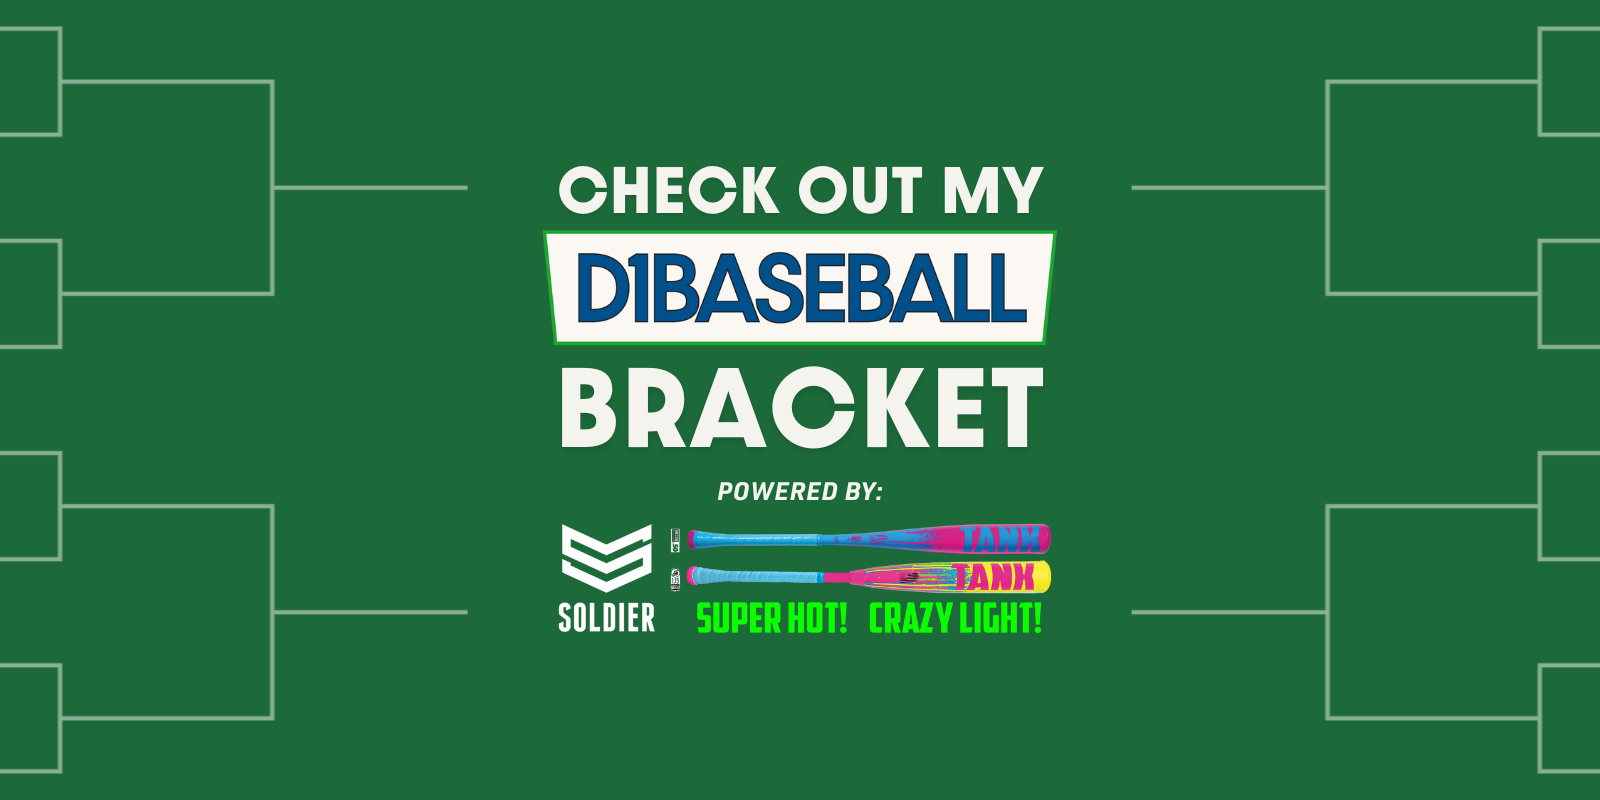 bracket-challenge.d1baseball.com